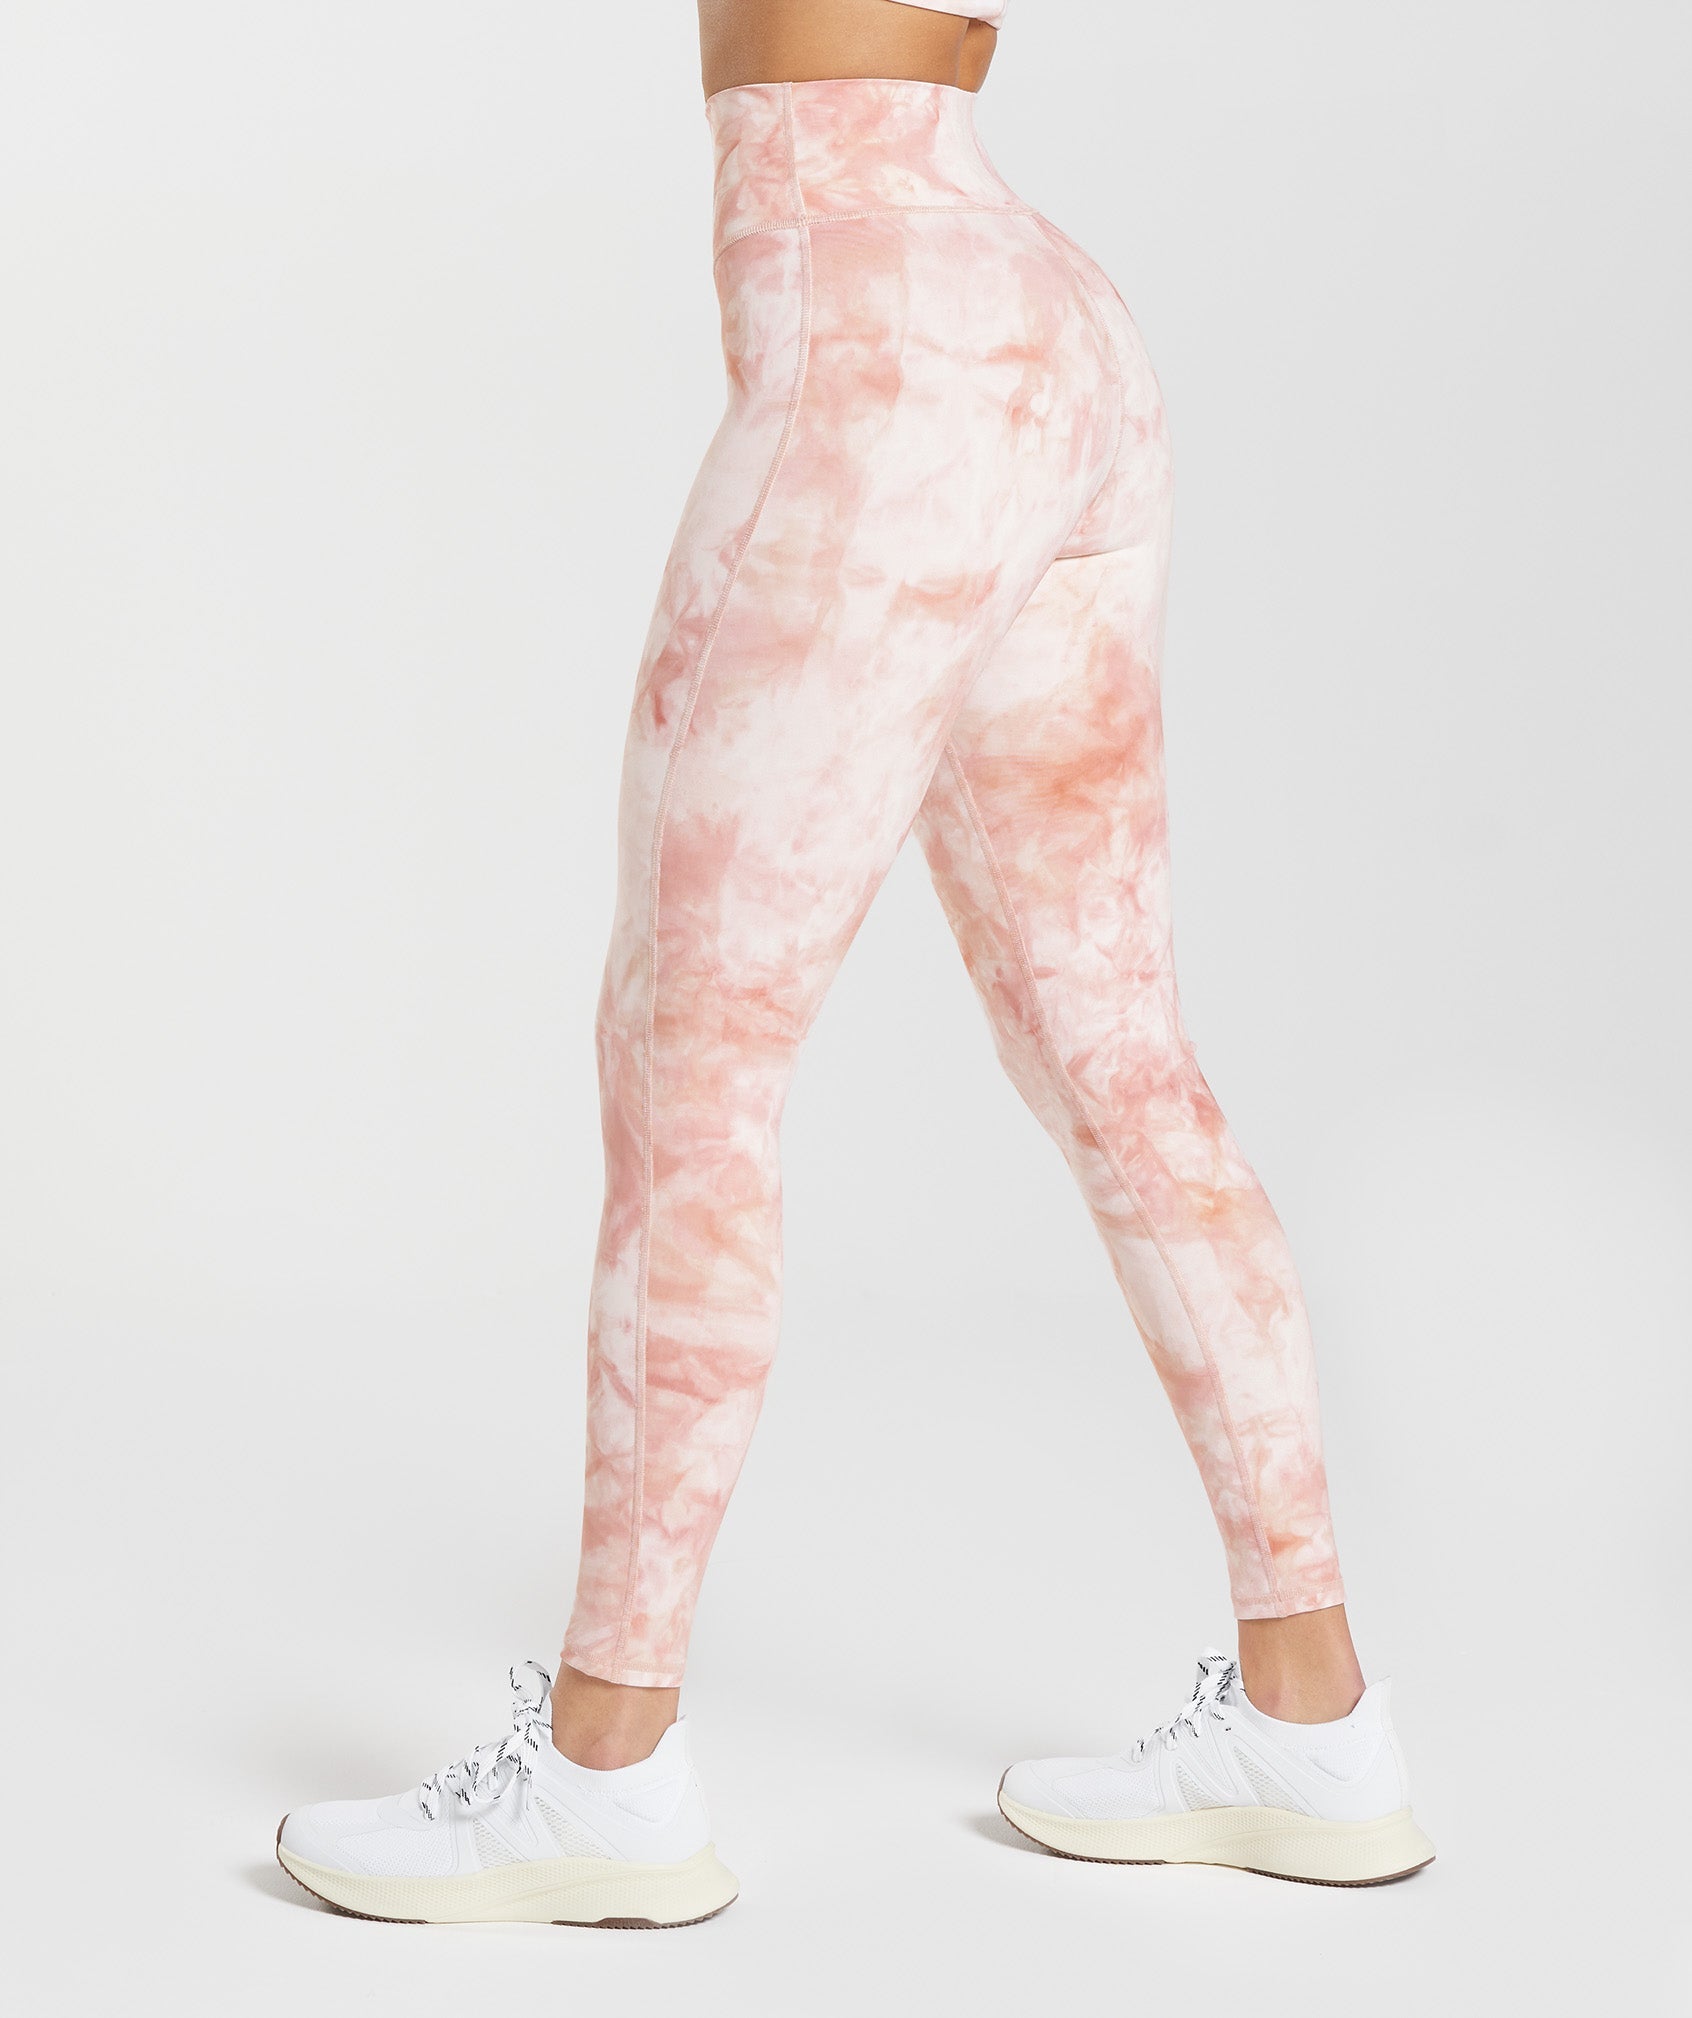 Elevate Spray Dye Leggings in White/Misty Pink/Scandi Pink - view 3